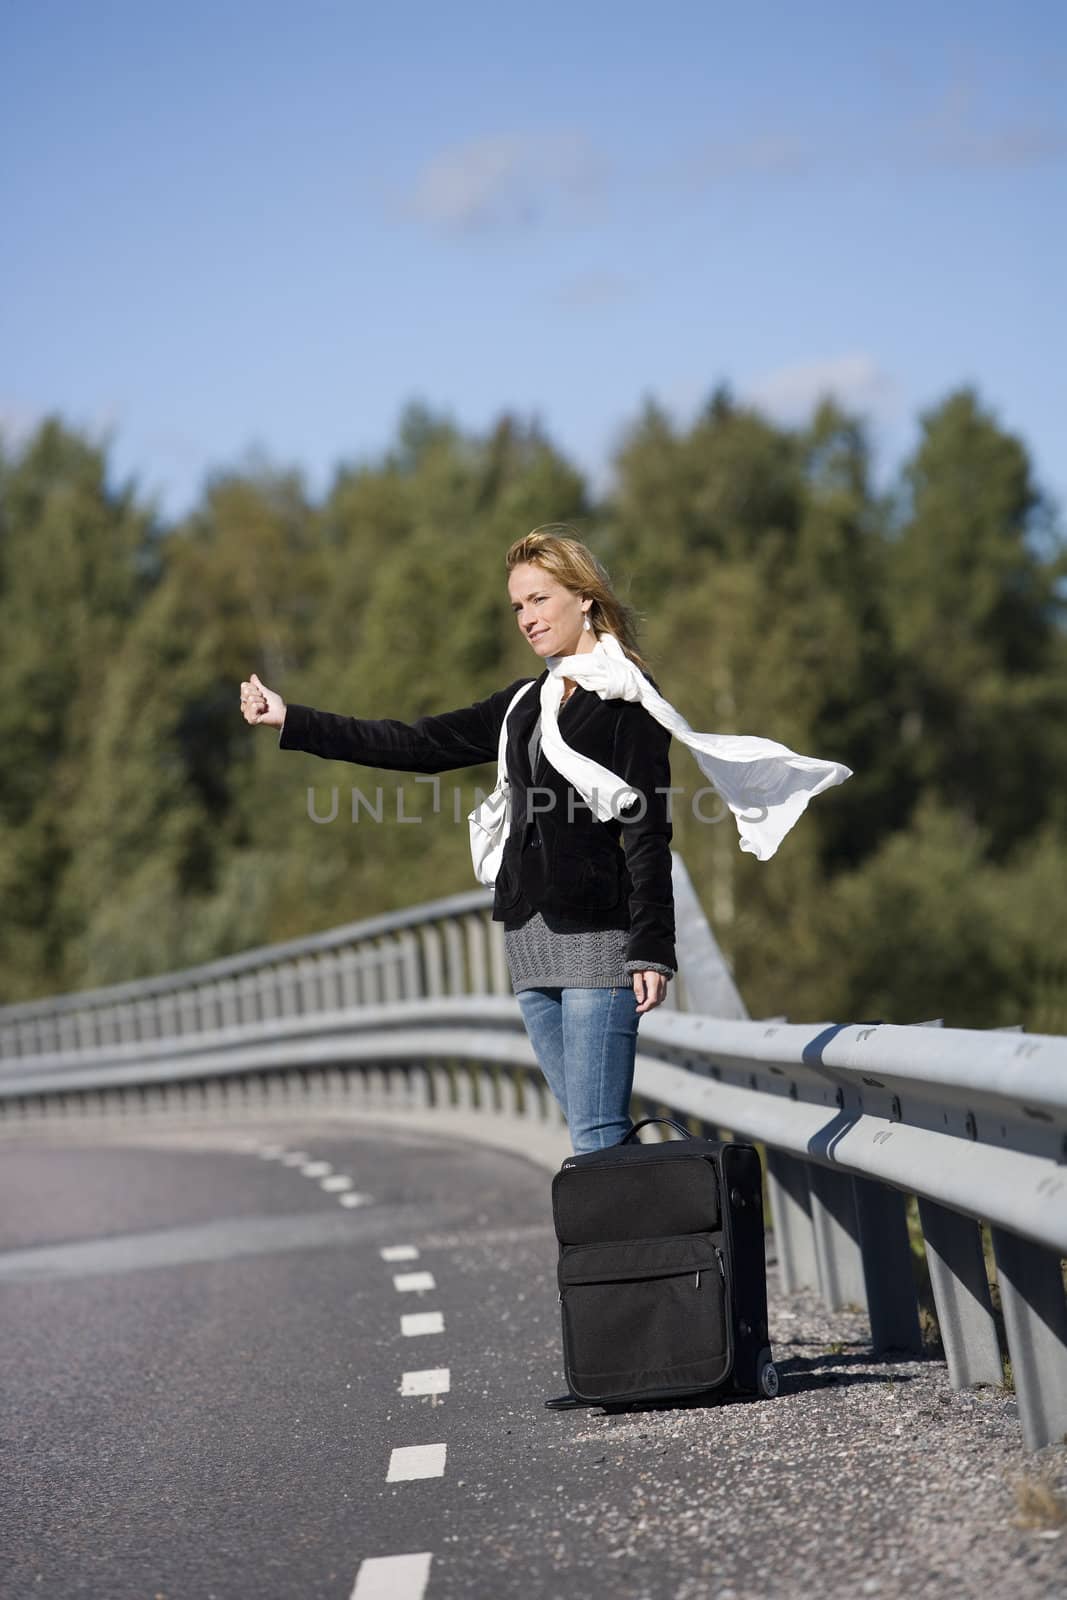 Hitchhiking woman by gemenacom